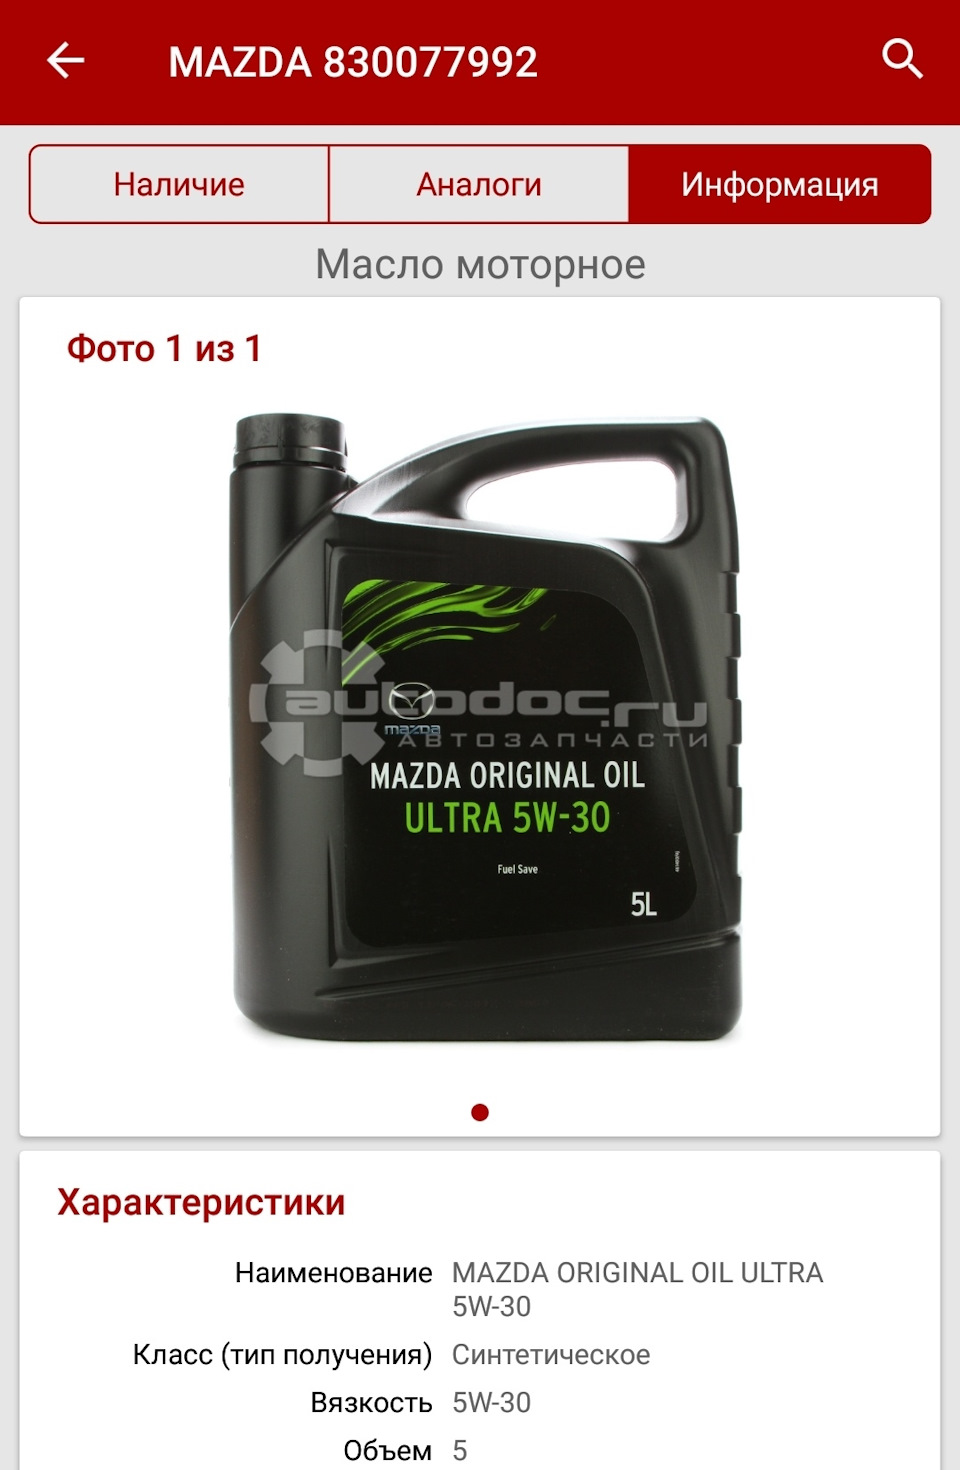 Российские аналоги масел. Масло 830077992. Mazda 830077992. Масло Мазда аналог. Моторное масло Mazda Original Oil Ultra 5w-30 5 л отзывы.